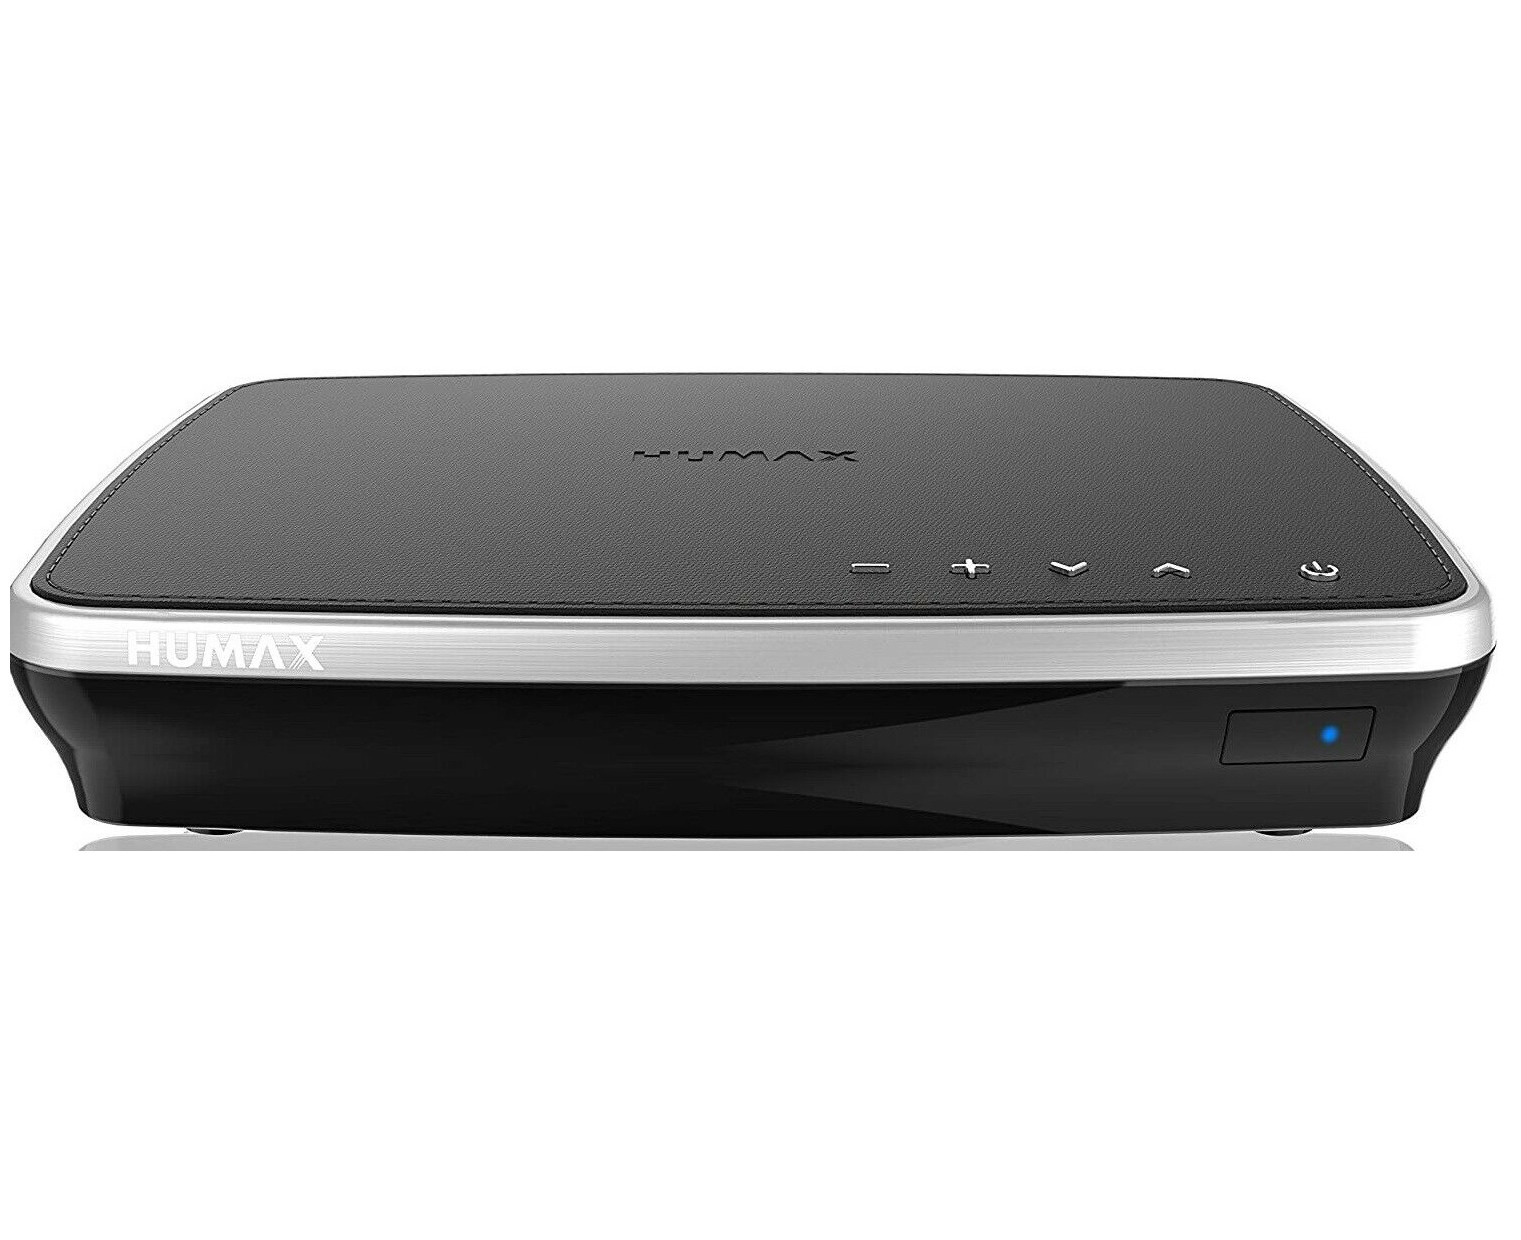 HUMAX 2tune HDR-3000T Twin HD Set Top Box & Quad PVR Recorder With 500GB HDD, Netflix & Ice TV - Refurbished Grade A Catch.com.au